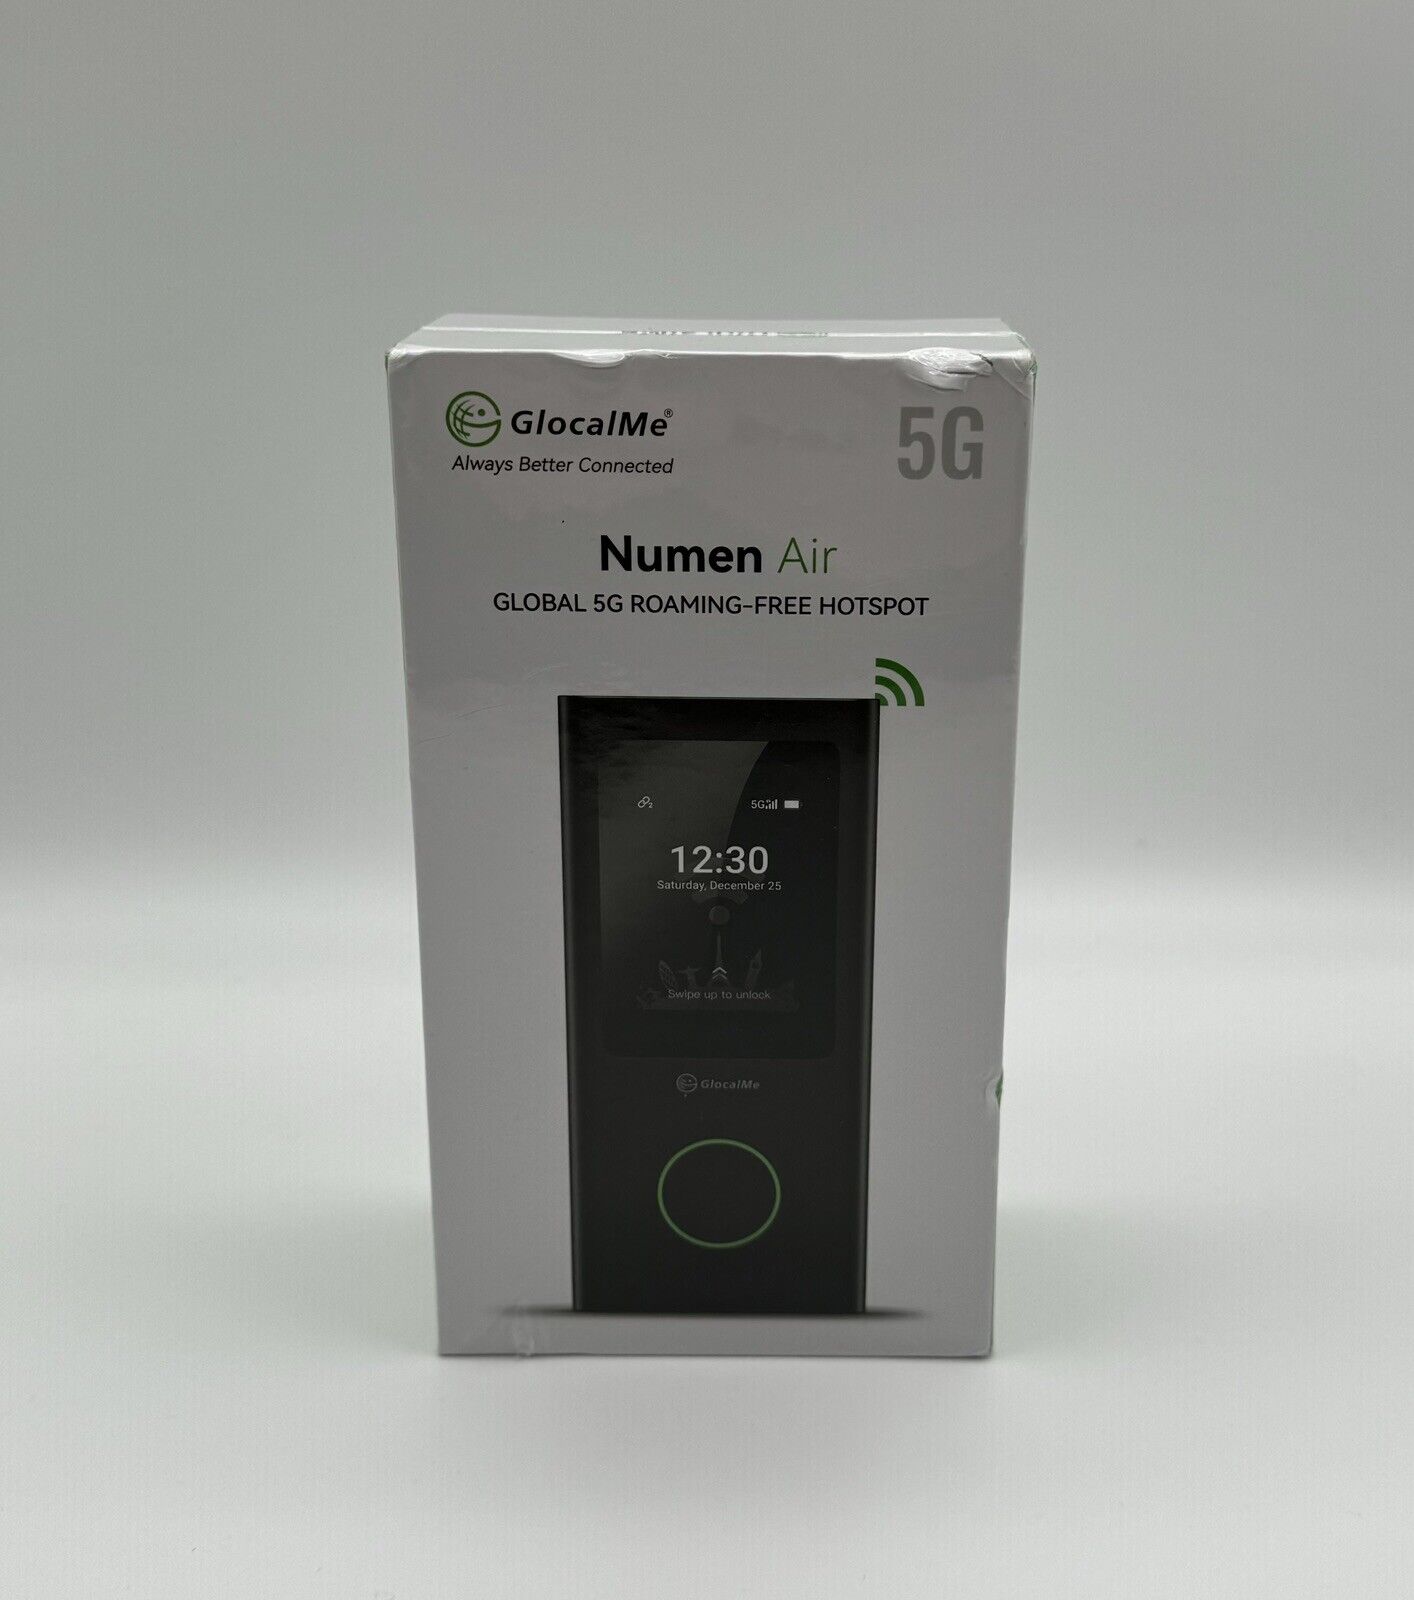 NEW GlocalMe Numen Air 5G Portable WiFi Mobile Hotspot